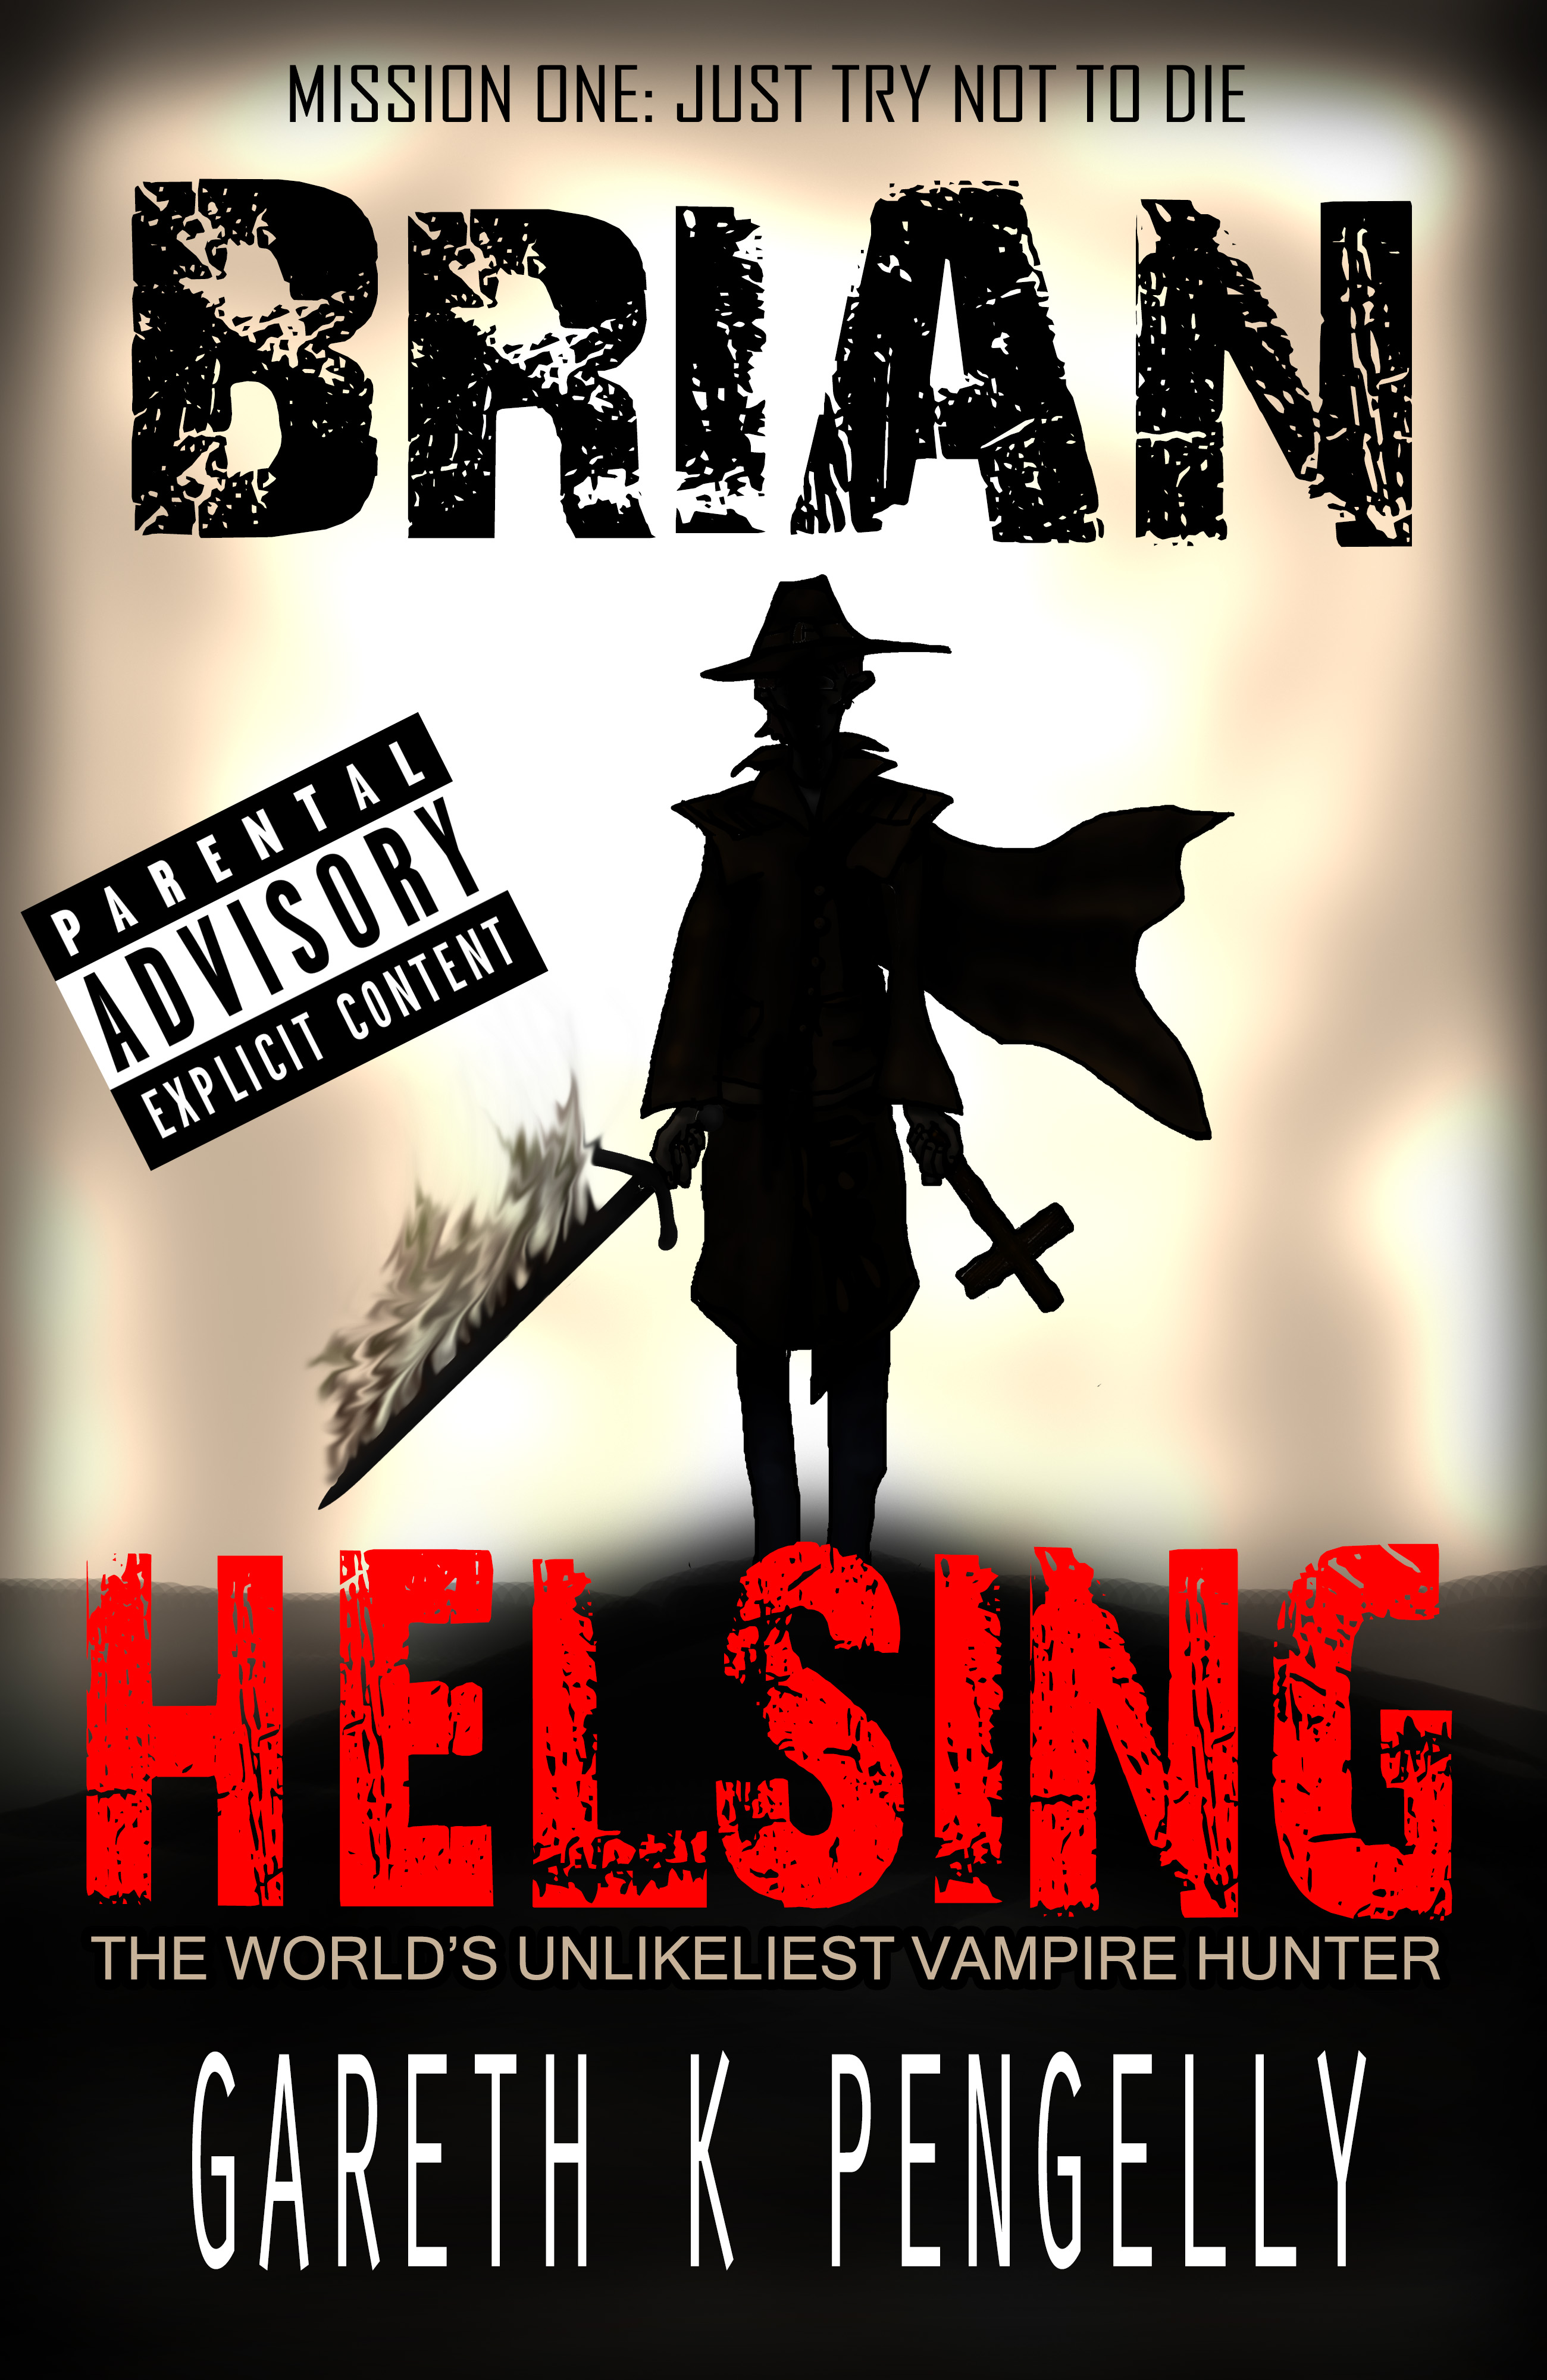 FREE: Brian Helsing: The World’s Unlikeliest Vampire Hunter by Gareth K Pengelly